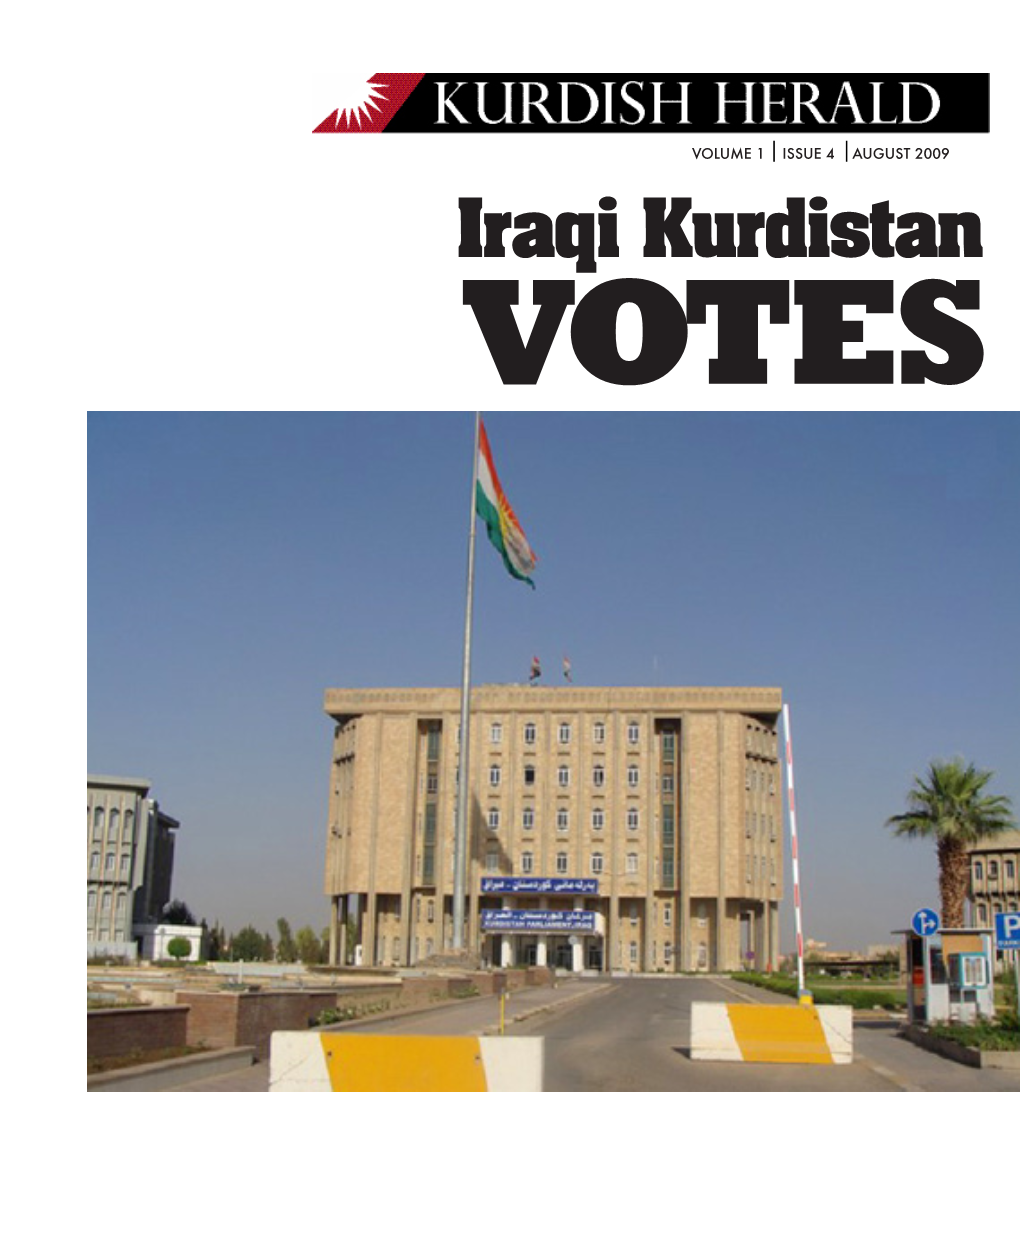 Iraqi Kurdistan VOTES CONTENTS